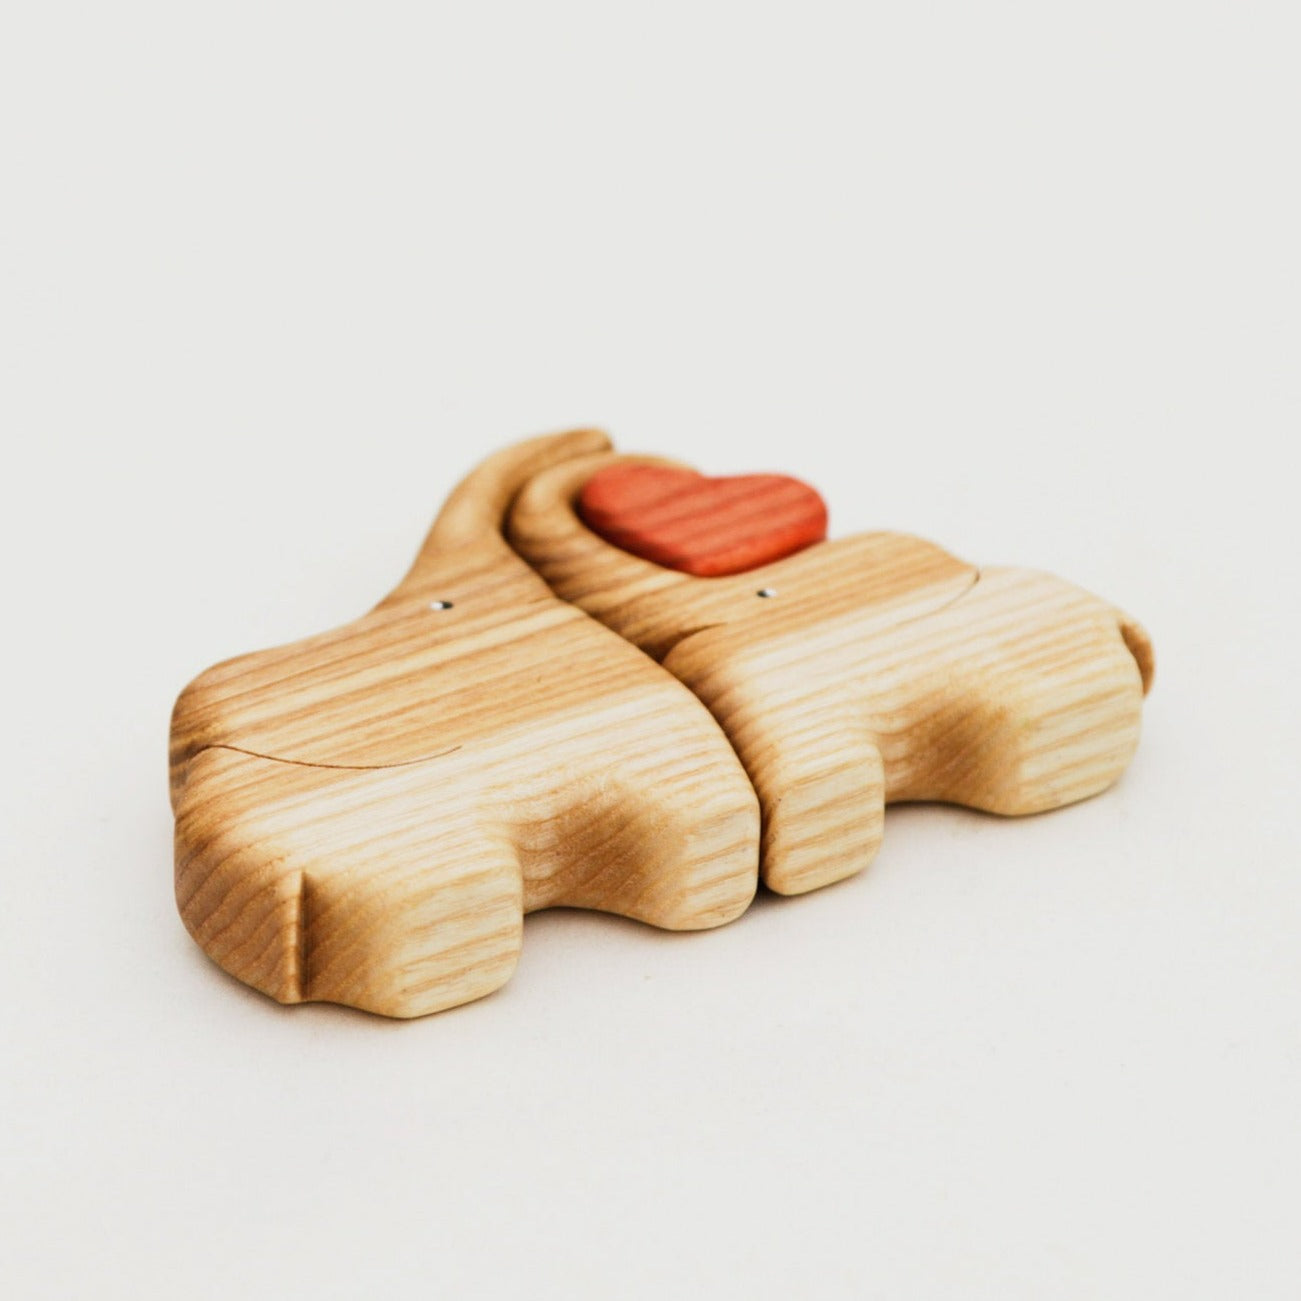 Wooden elephants family puzzle